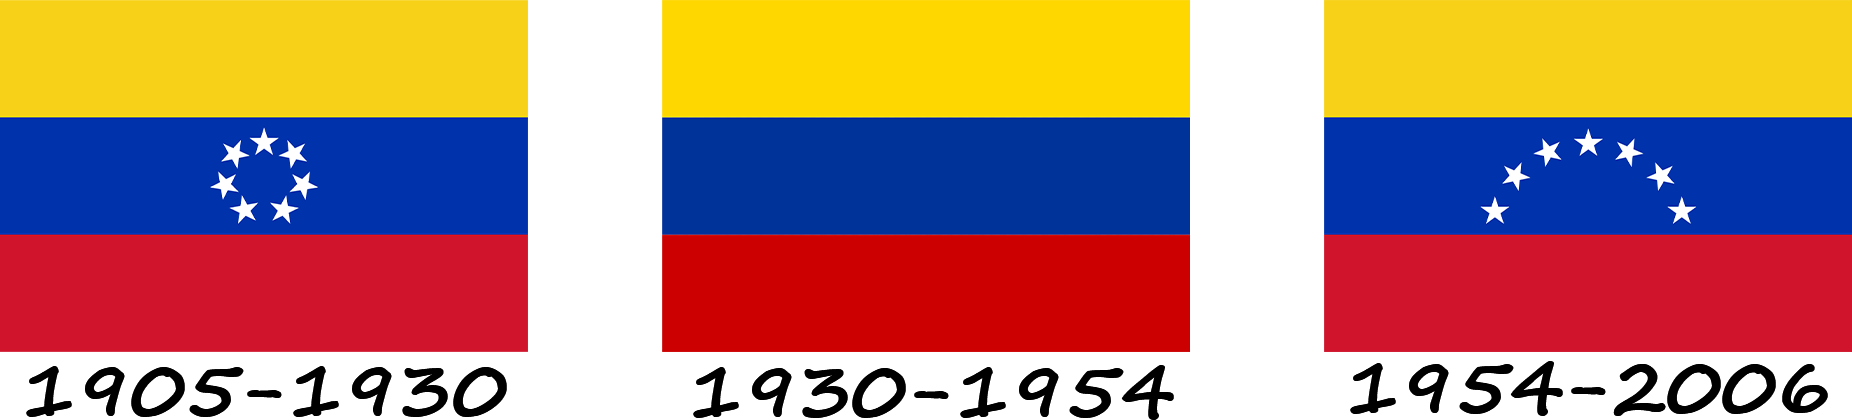 History of the Venezuelan flag